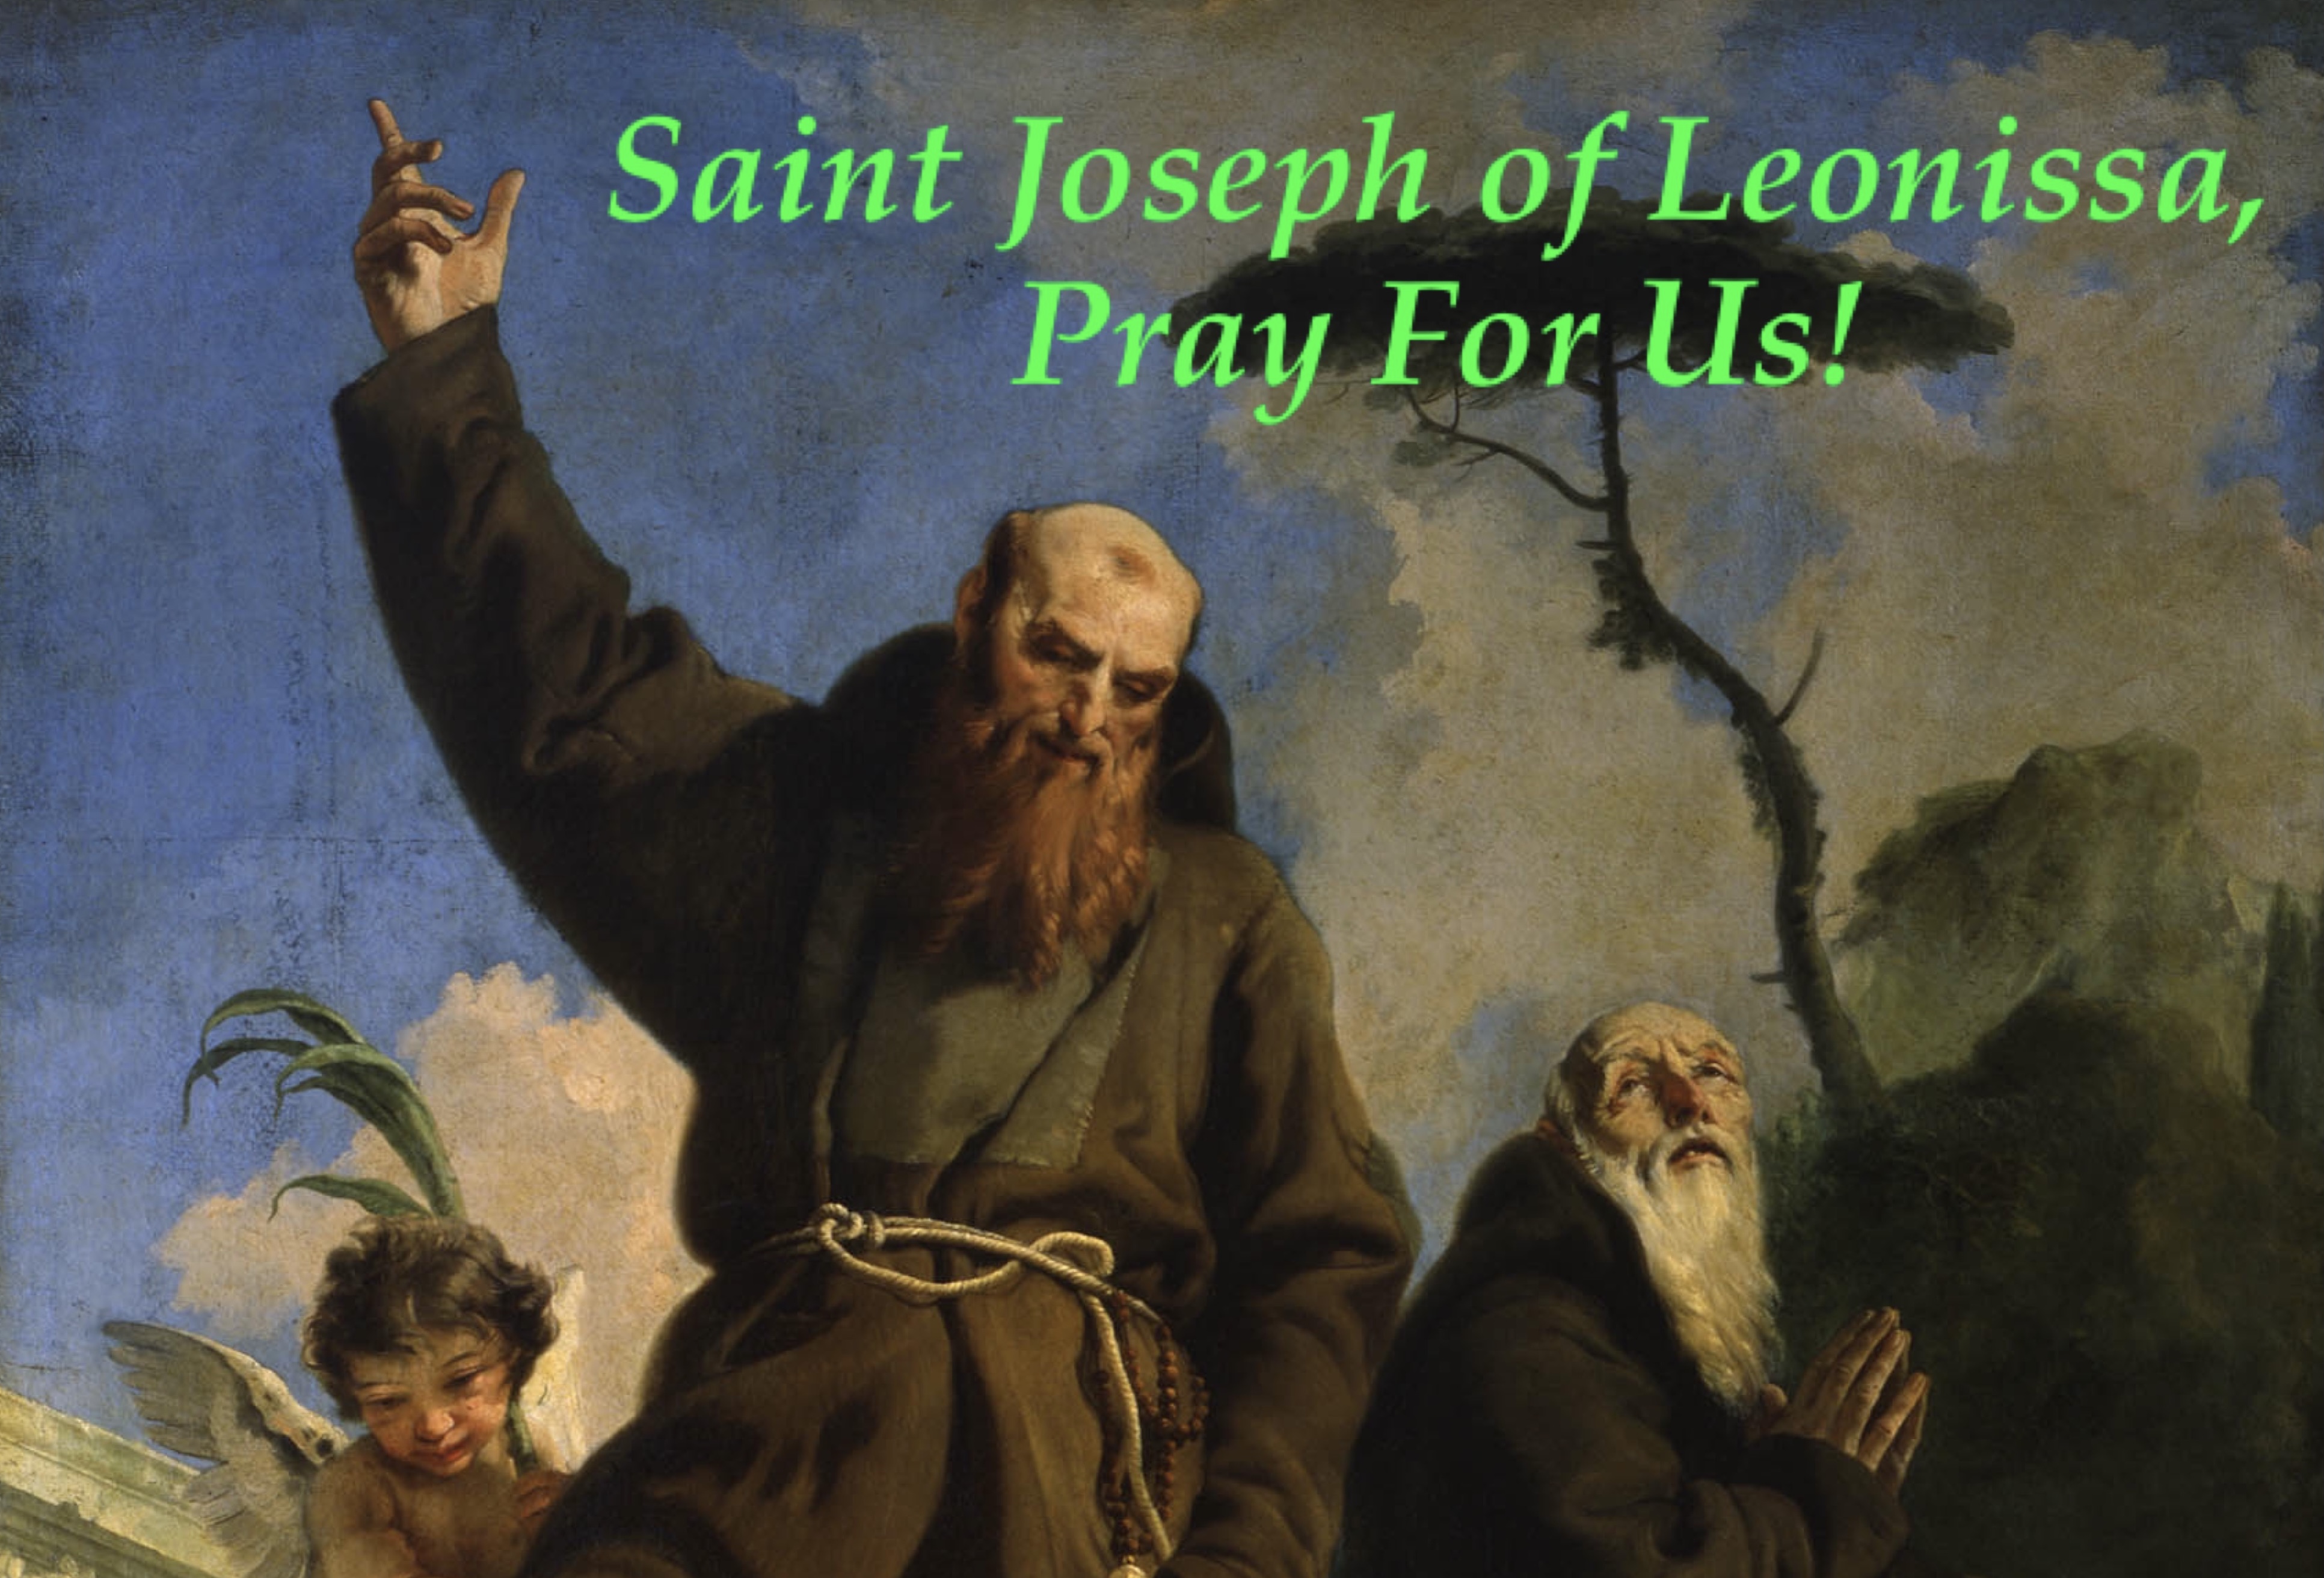 4th February - Saint Joseph of Leonissa